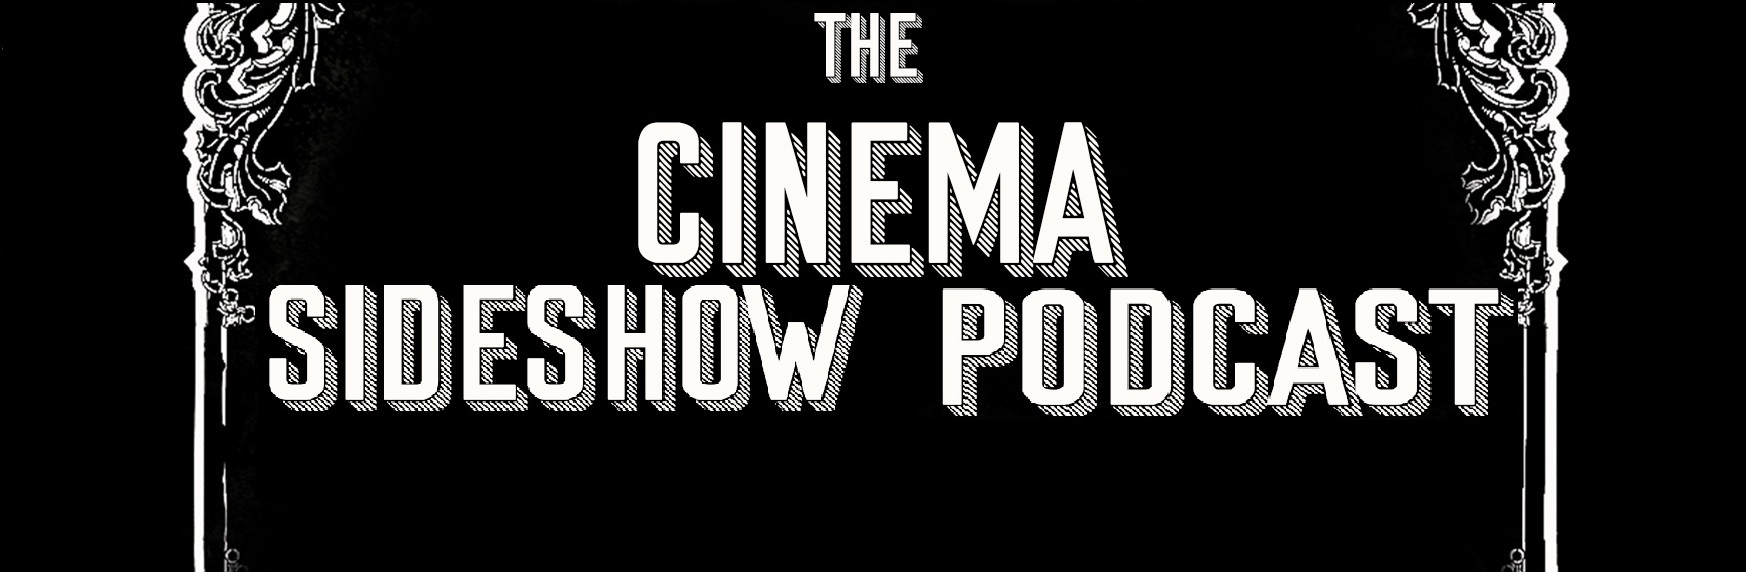 The Cinema Sideshow Podcast